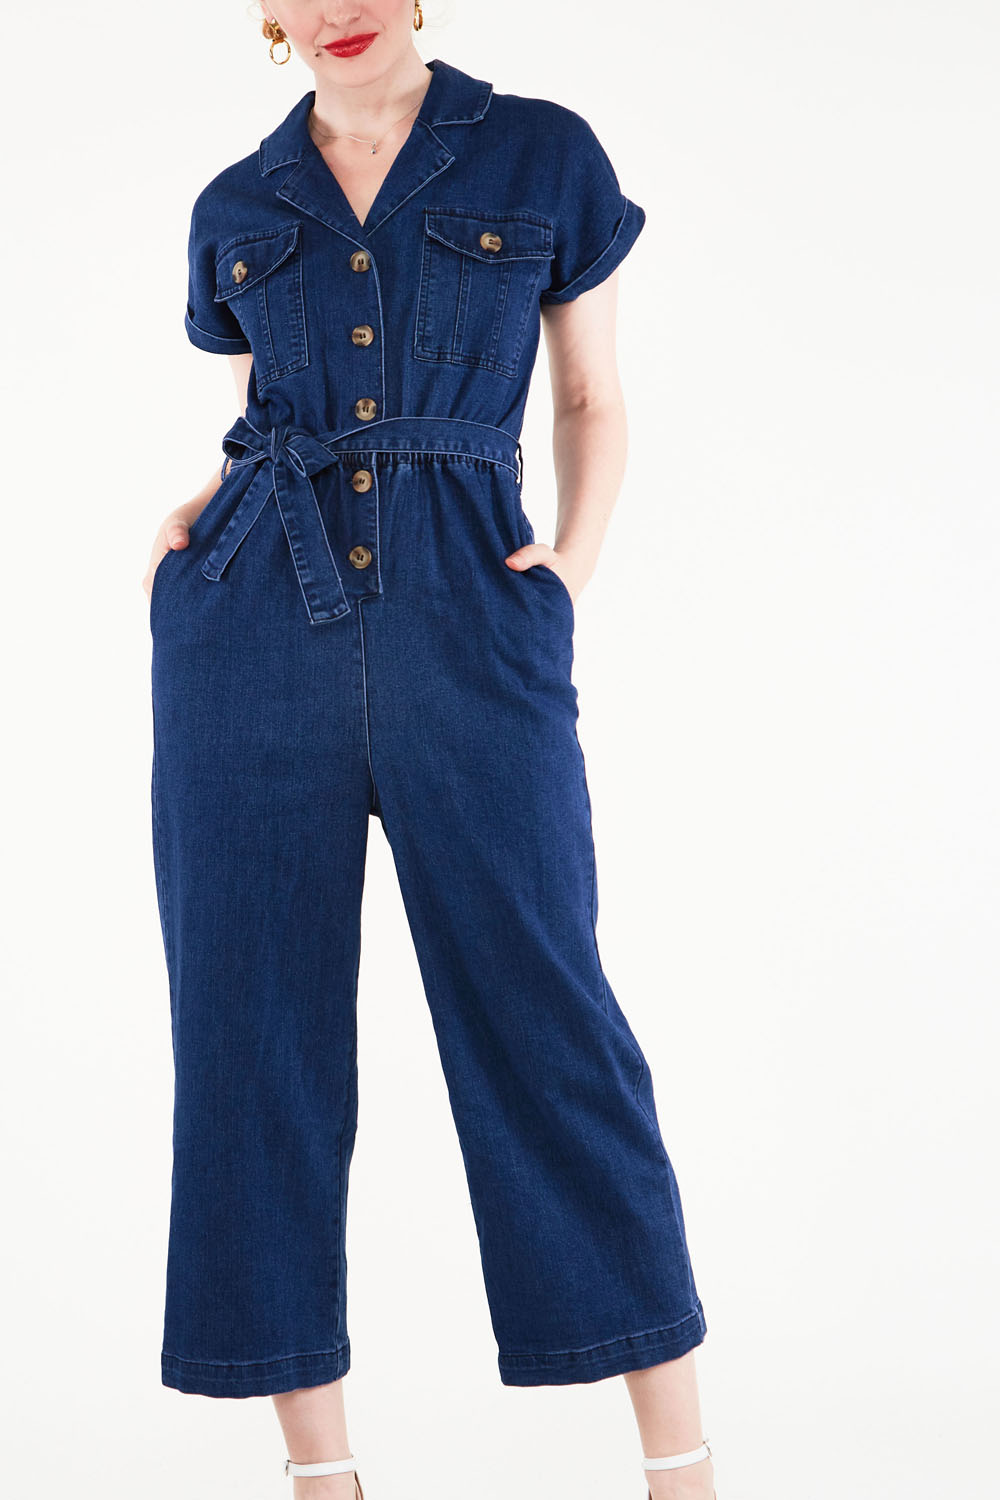 Poppy Denim Utility Jumpsuit | Vintage Inspired Fashion & Accessories ...